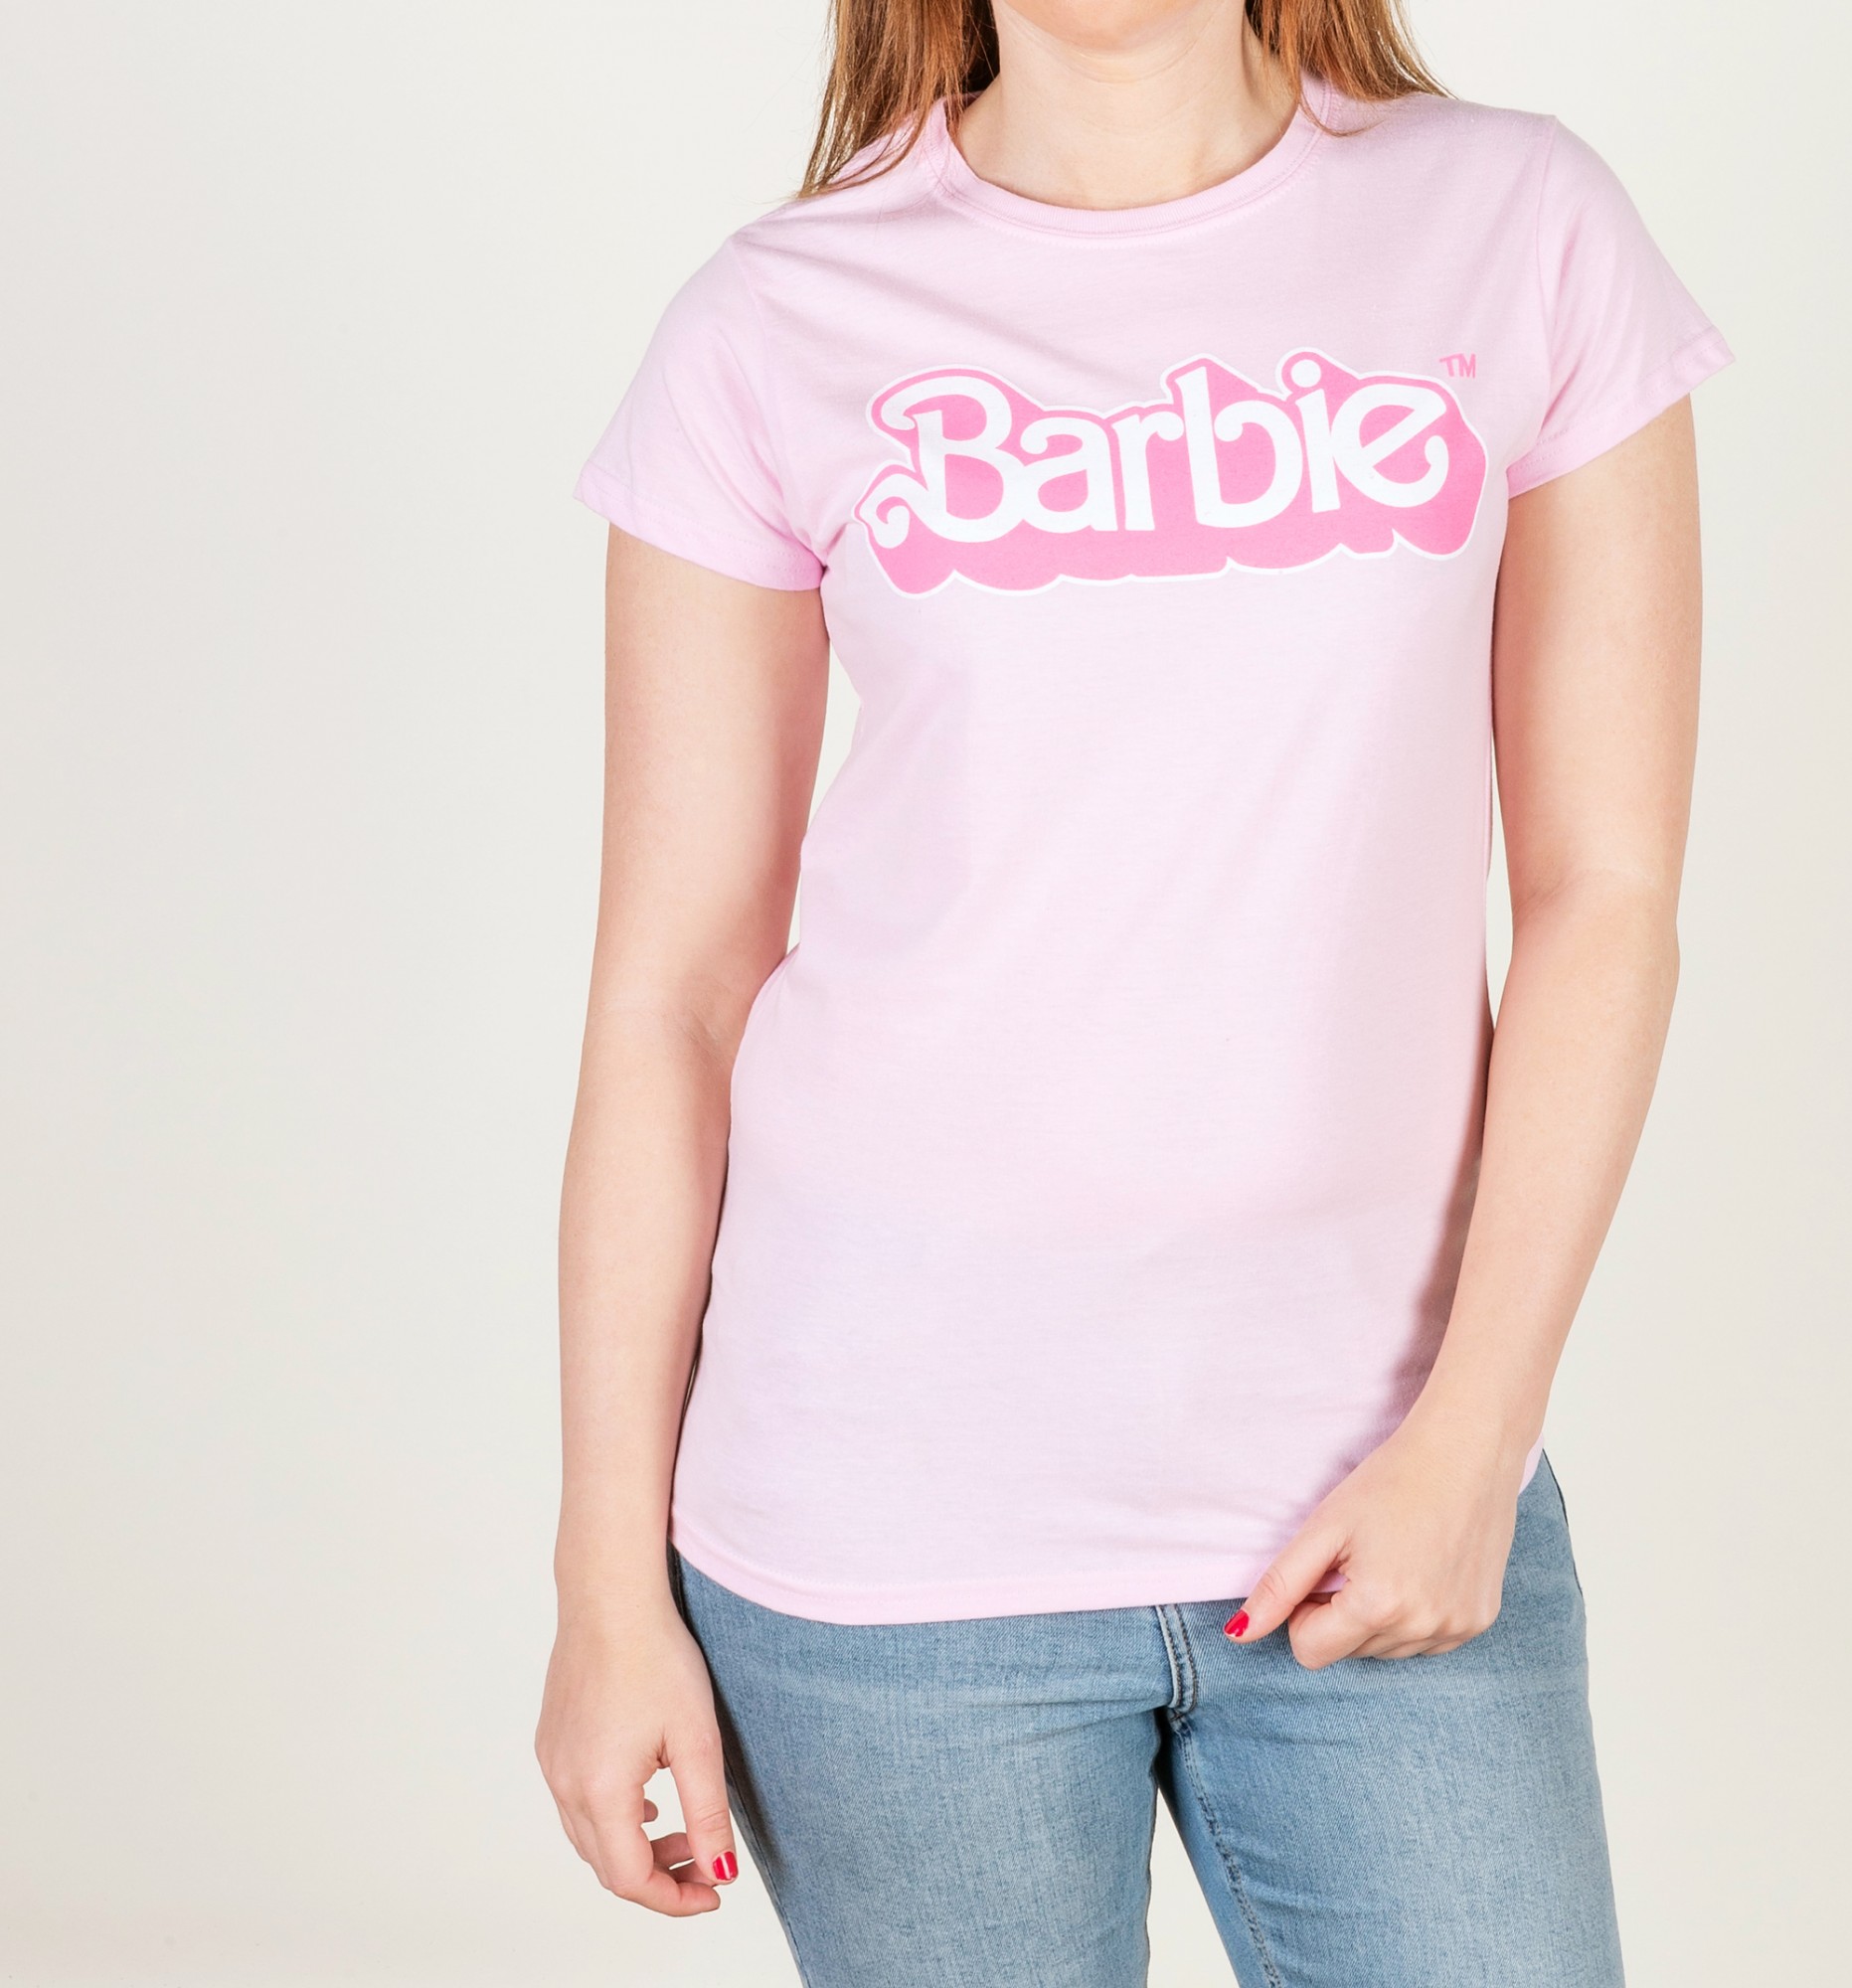 barbie t shirt womens